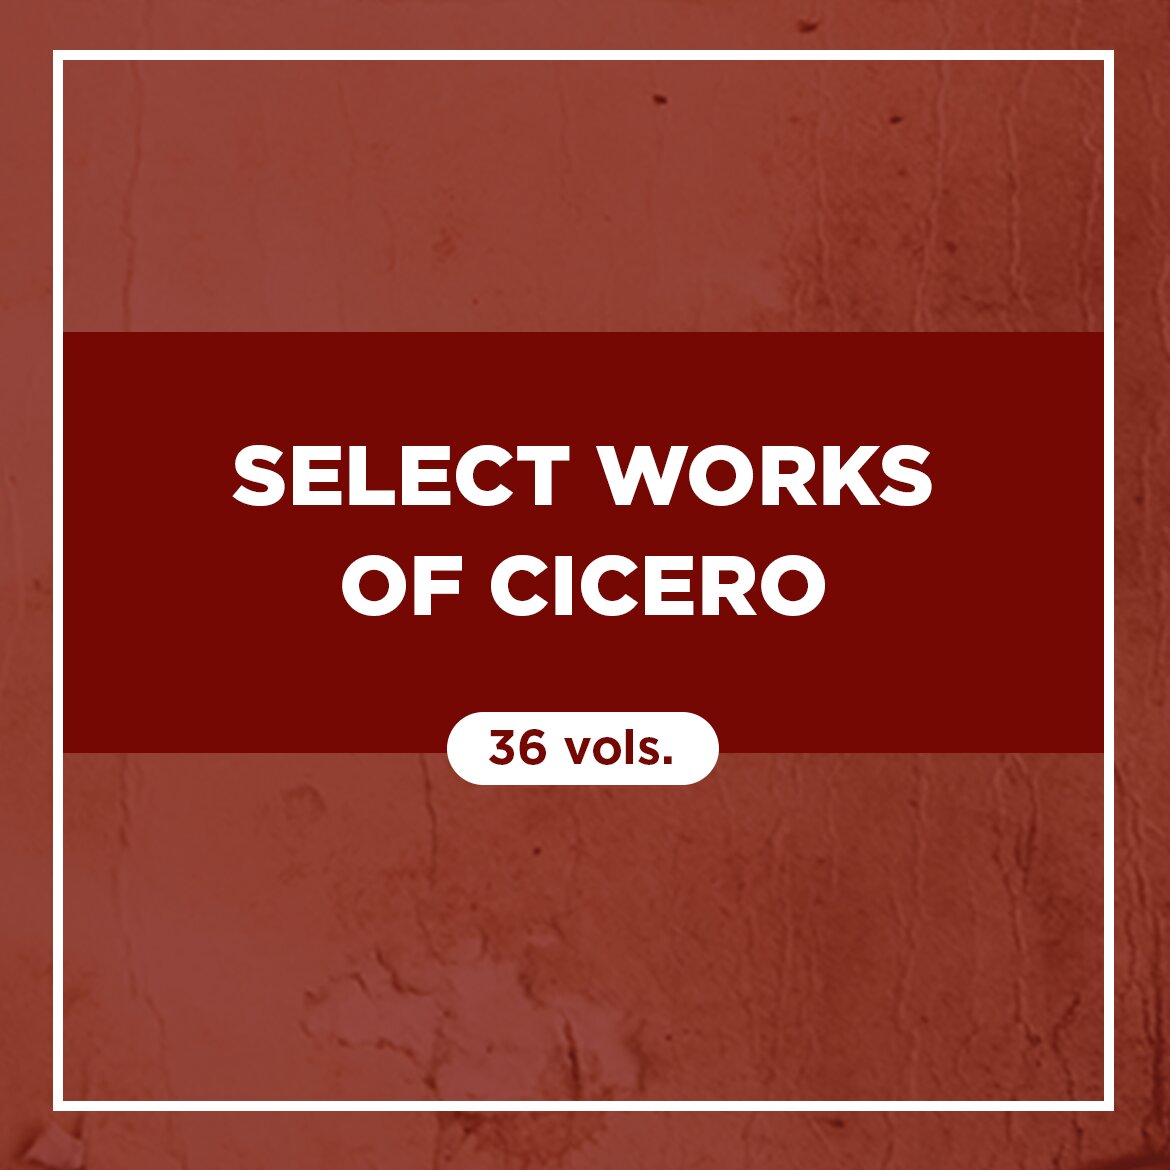 Select Works of Cicero (36 vols.)